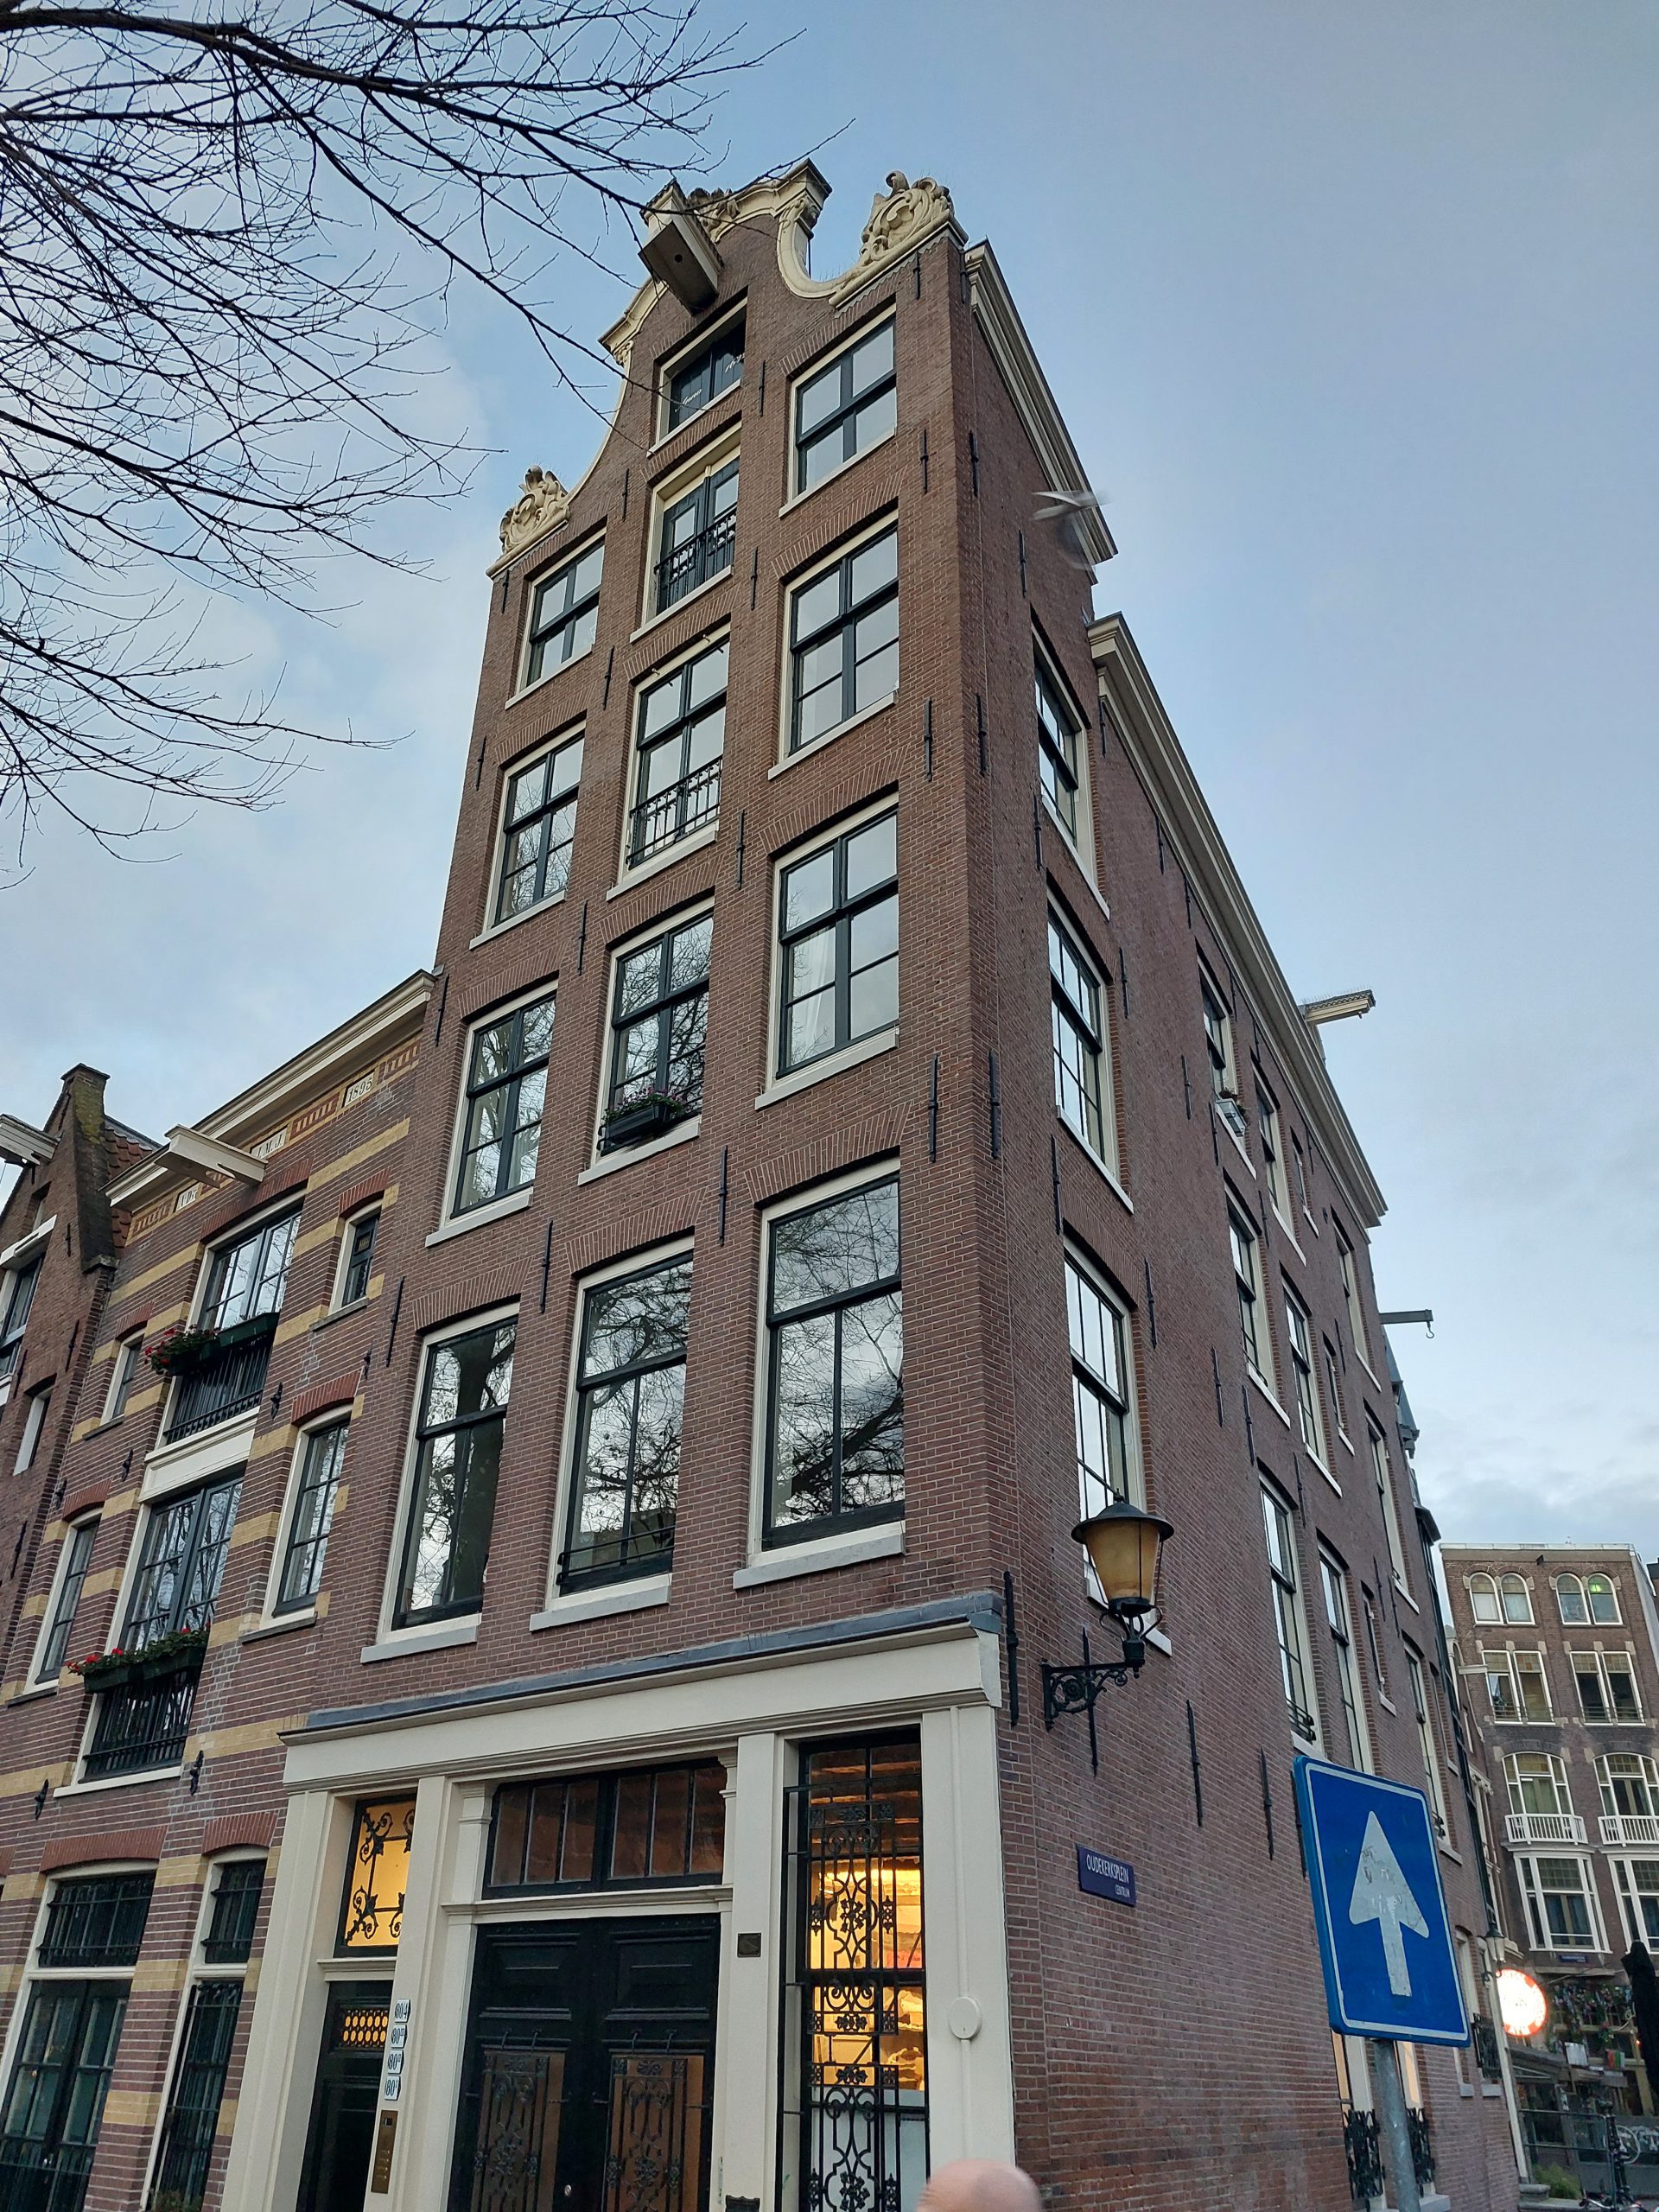 Oudekerkplein Amsterdam